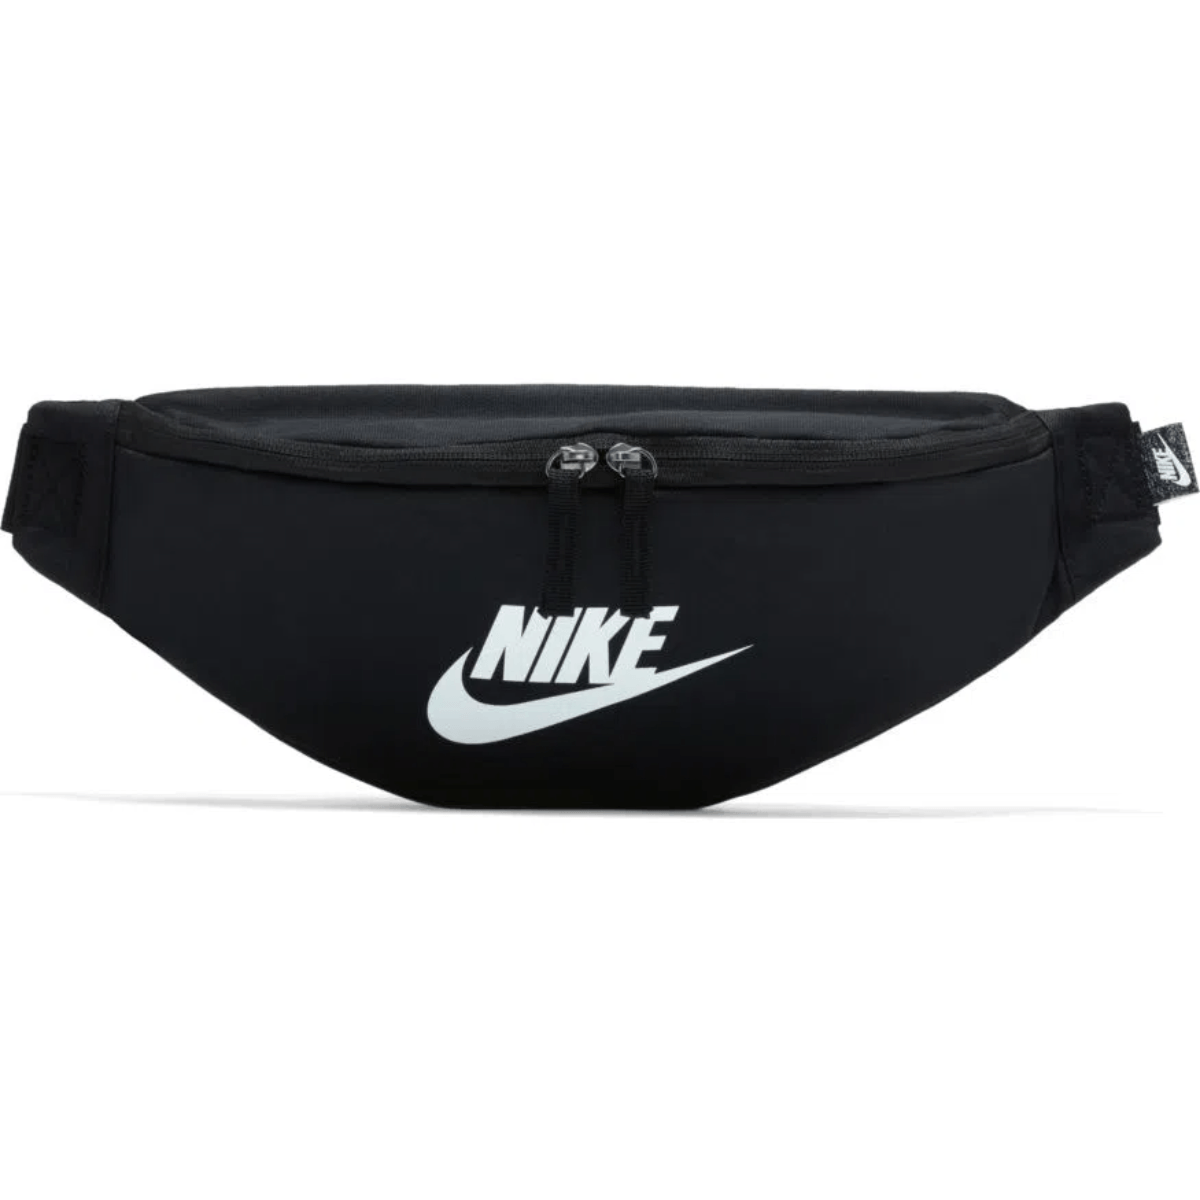 Unisex Nike Heritage Hip Waist Bum Pack Travel Bag Blue Pink